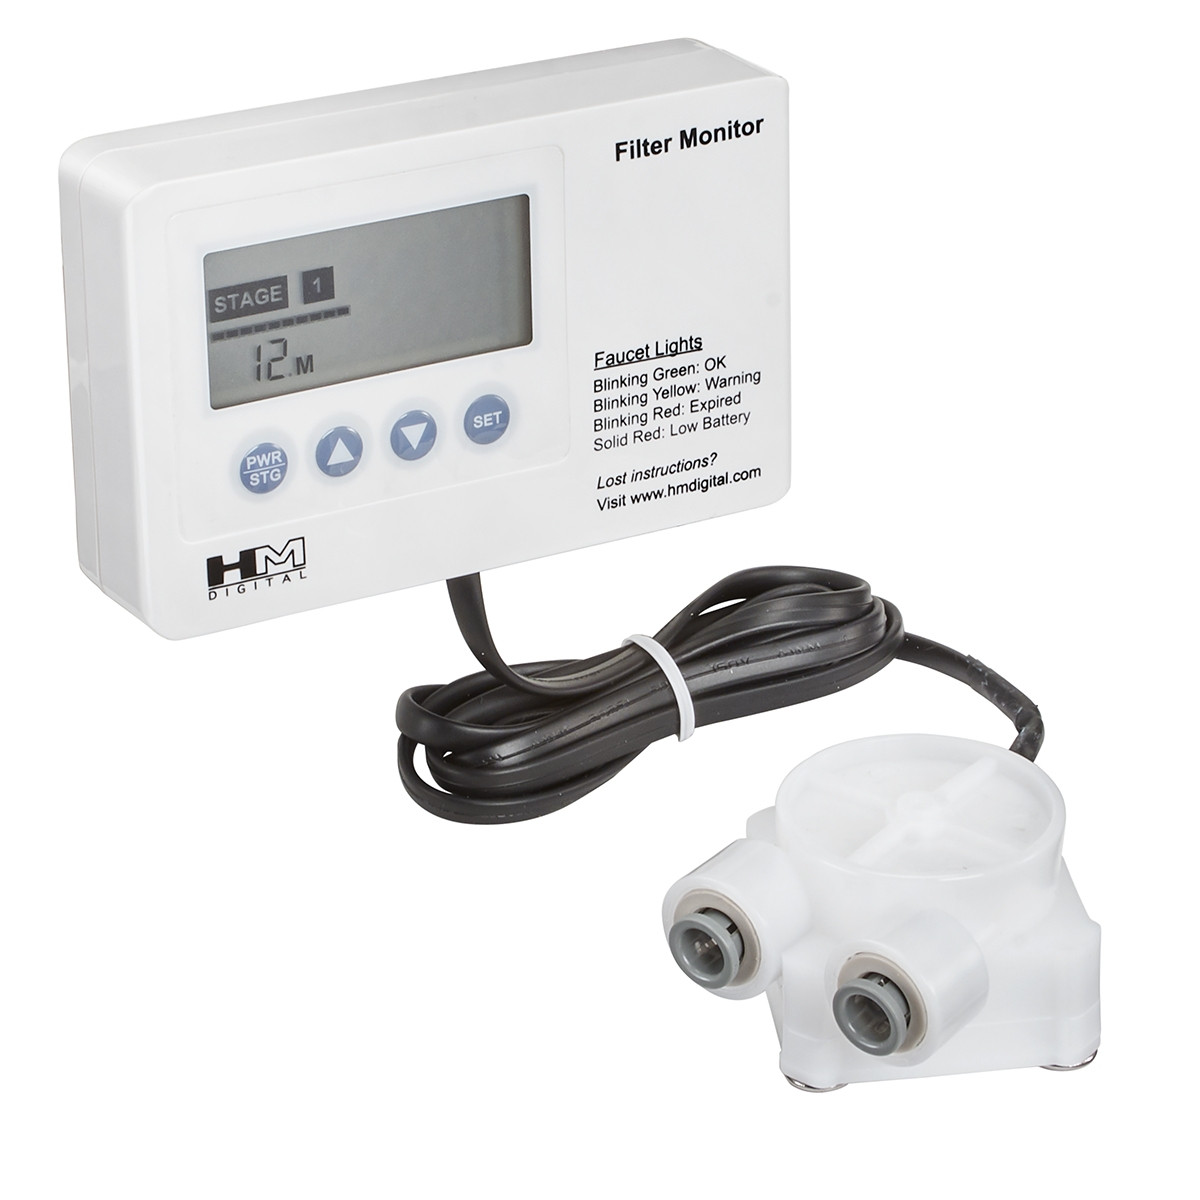 HM Digital FM-2 Filter Monitor with Volumizer